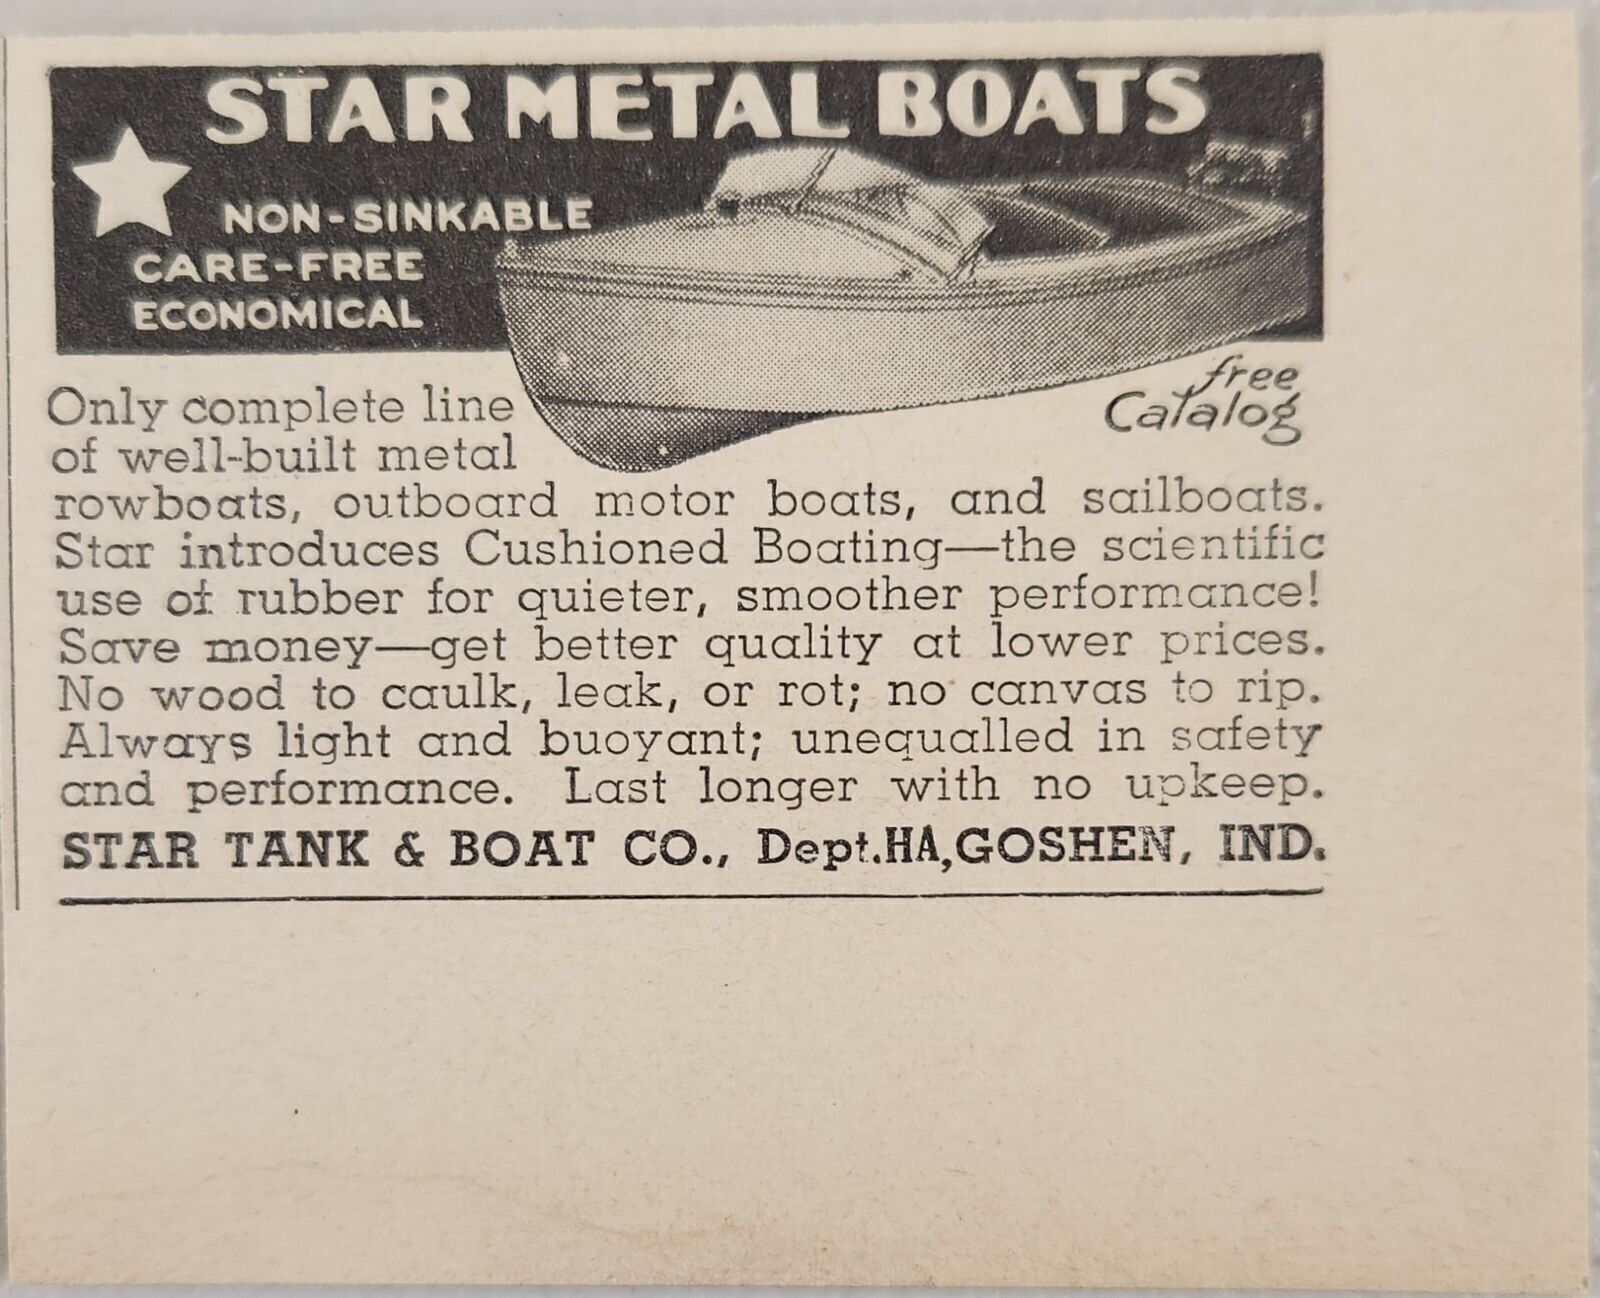 1937 Print Ad Star Metal Boats Non-Sinkable Star Tank & Boat Goshen,Indiana